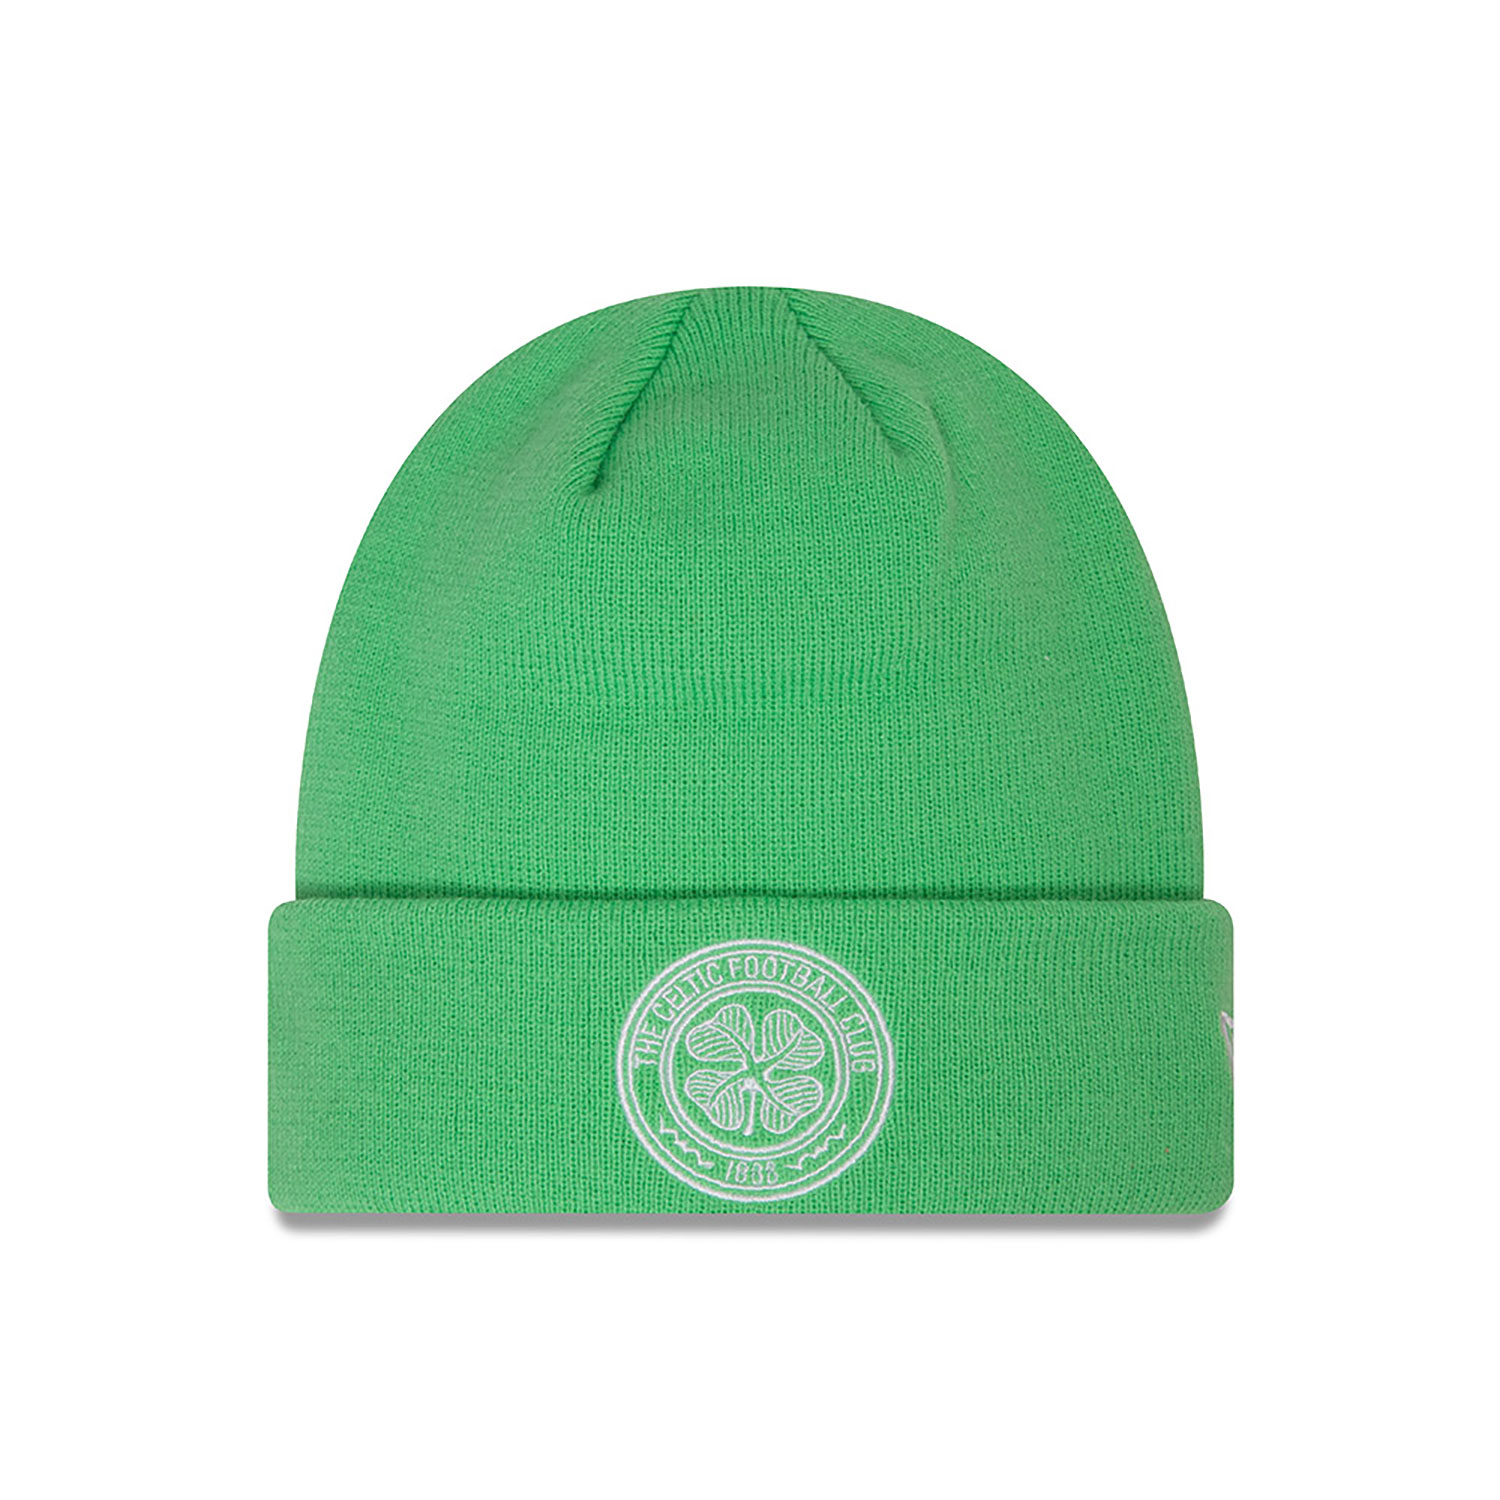 Celtic FC Seasonal Green Cuff Knit Beanie Hat